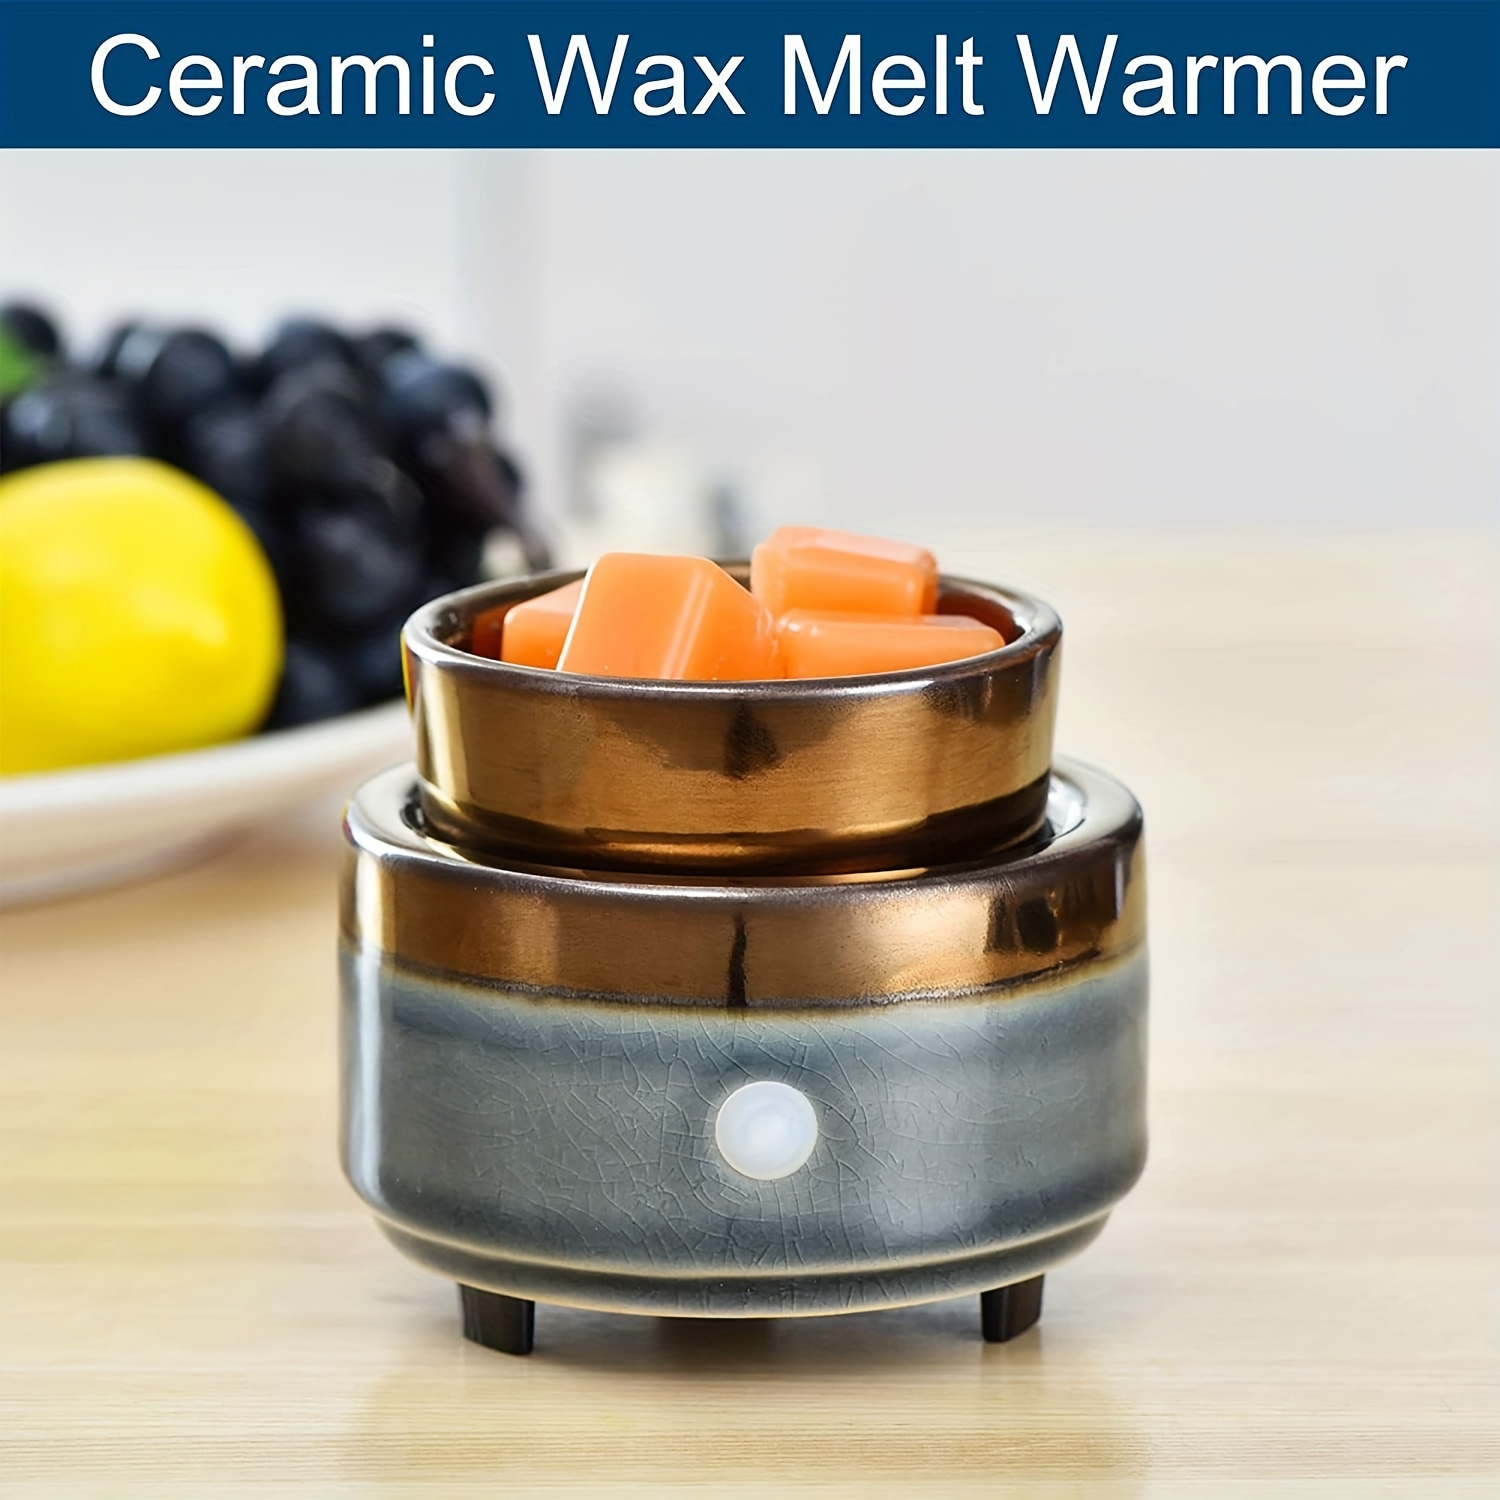 How to use a wax melt burner / warmer? – Serathena